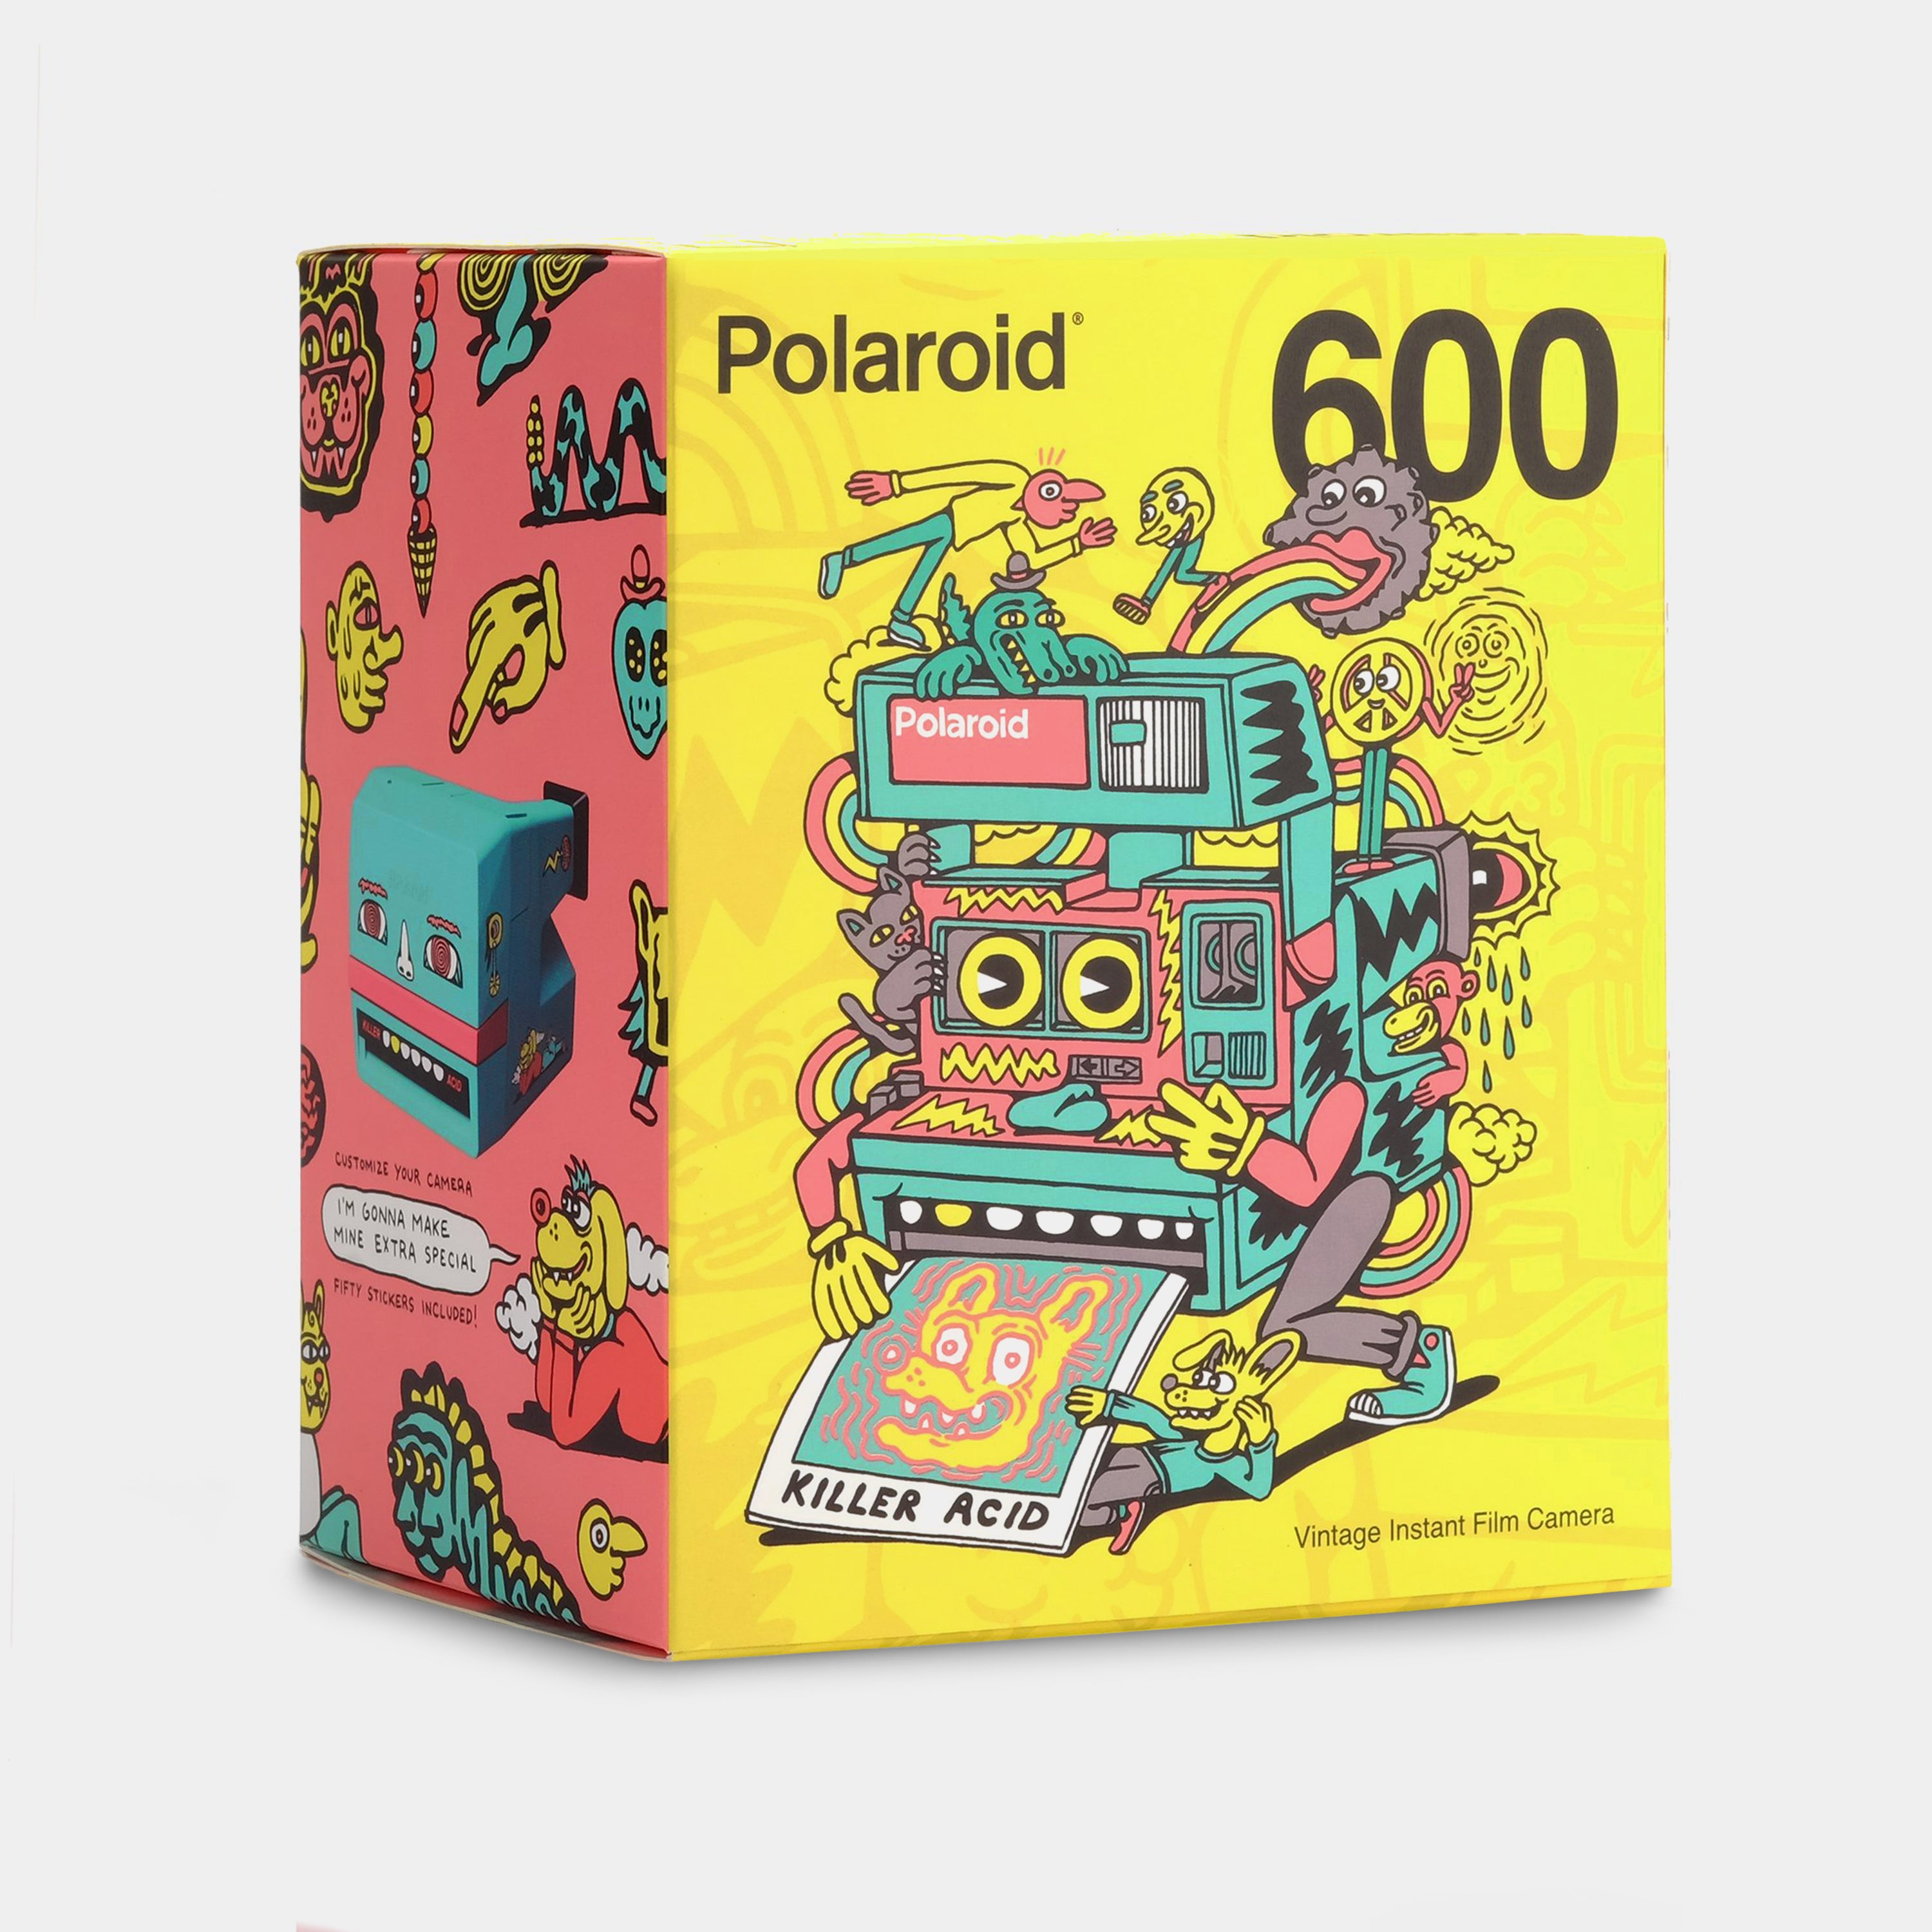 Polaroid 600 Killer Acid Instant Film Camera